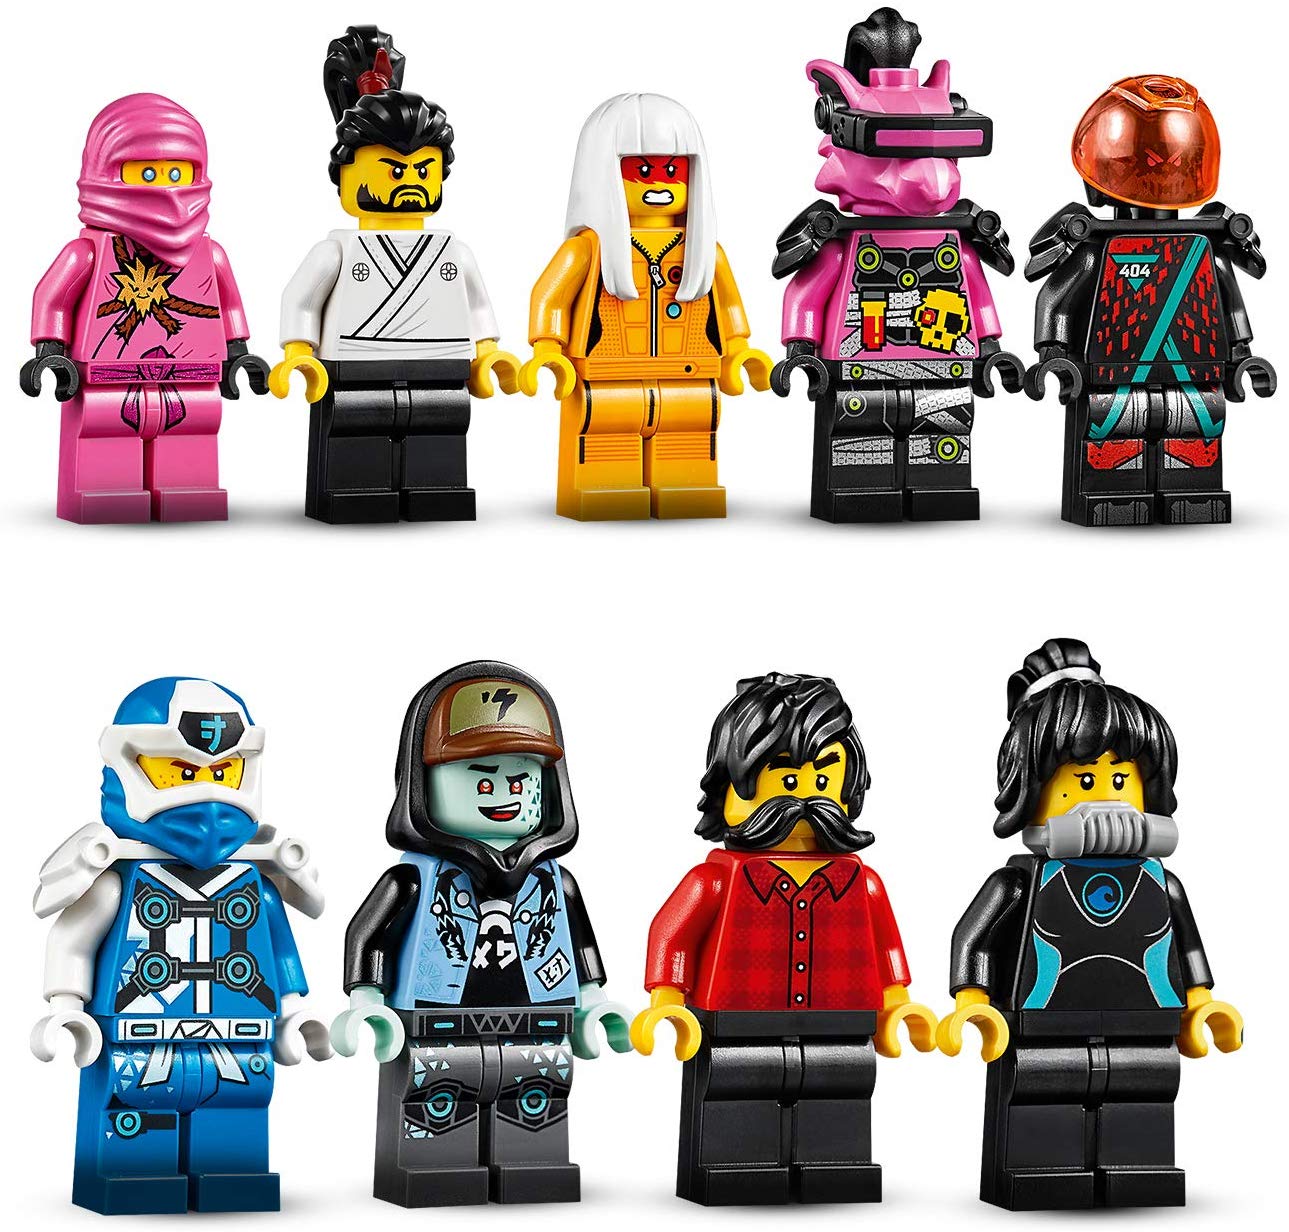 LEGO 樂高積木 Ninjago 71708 玩家市集